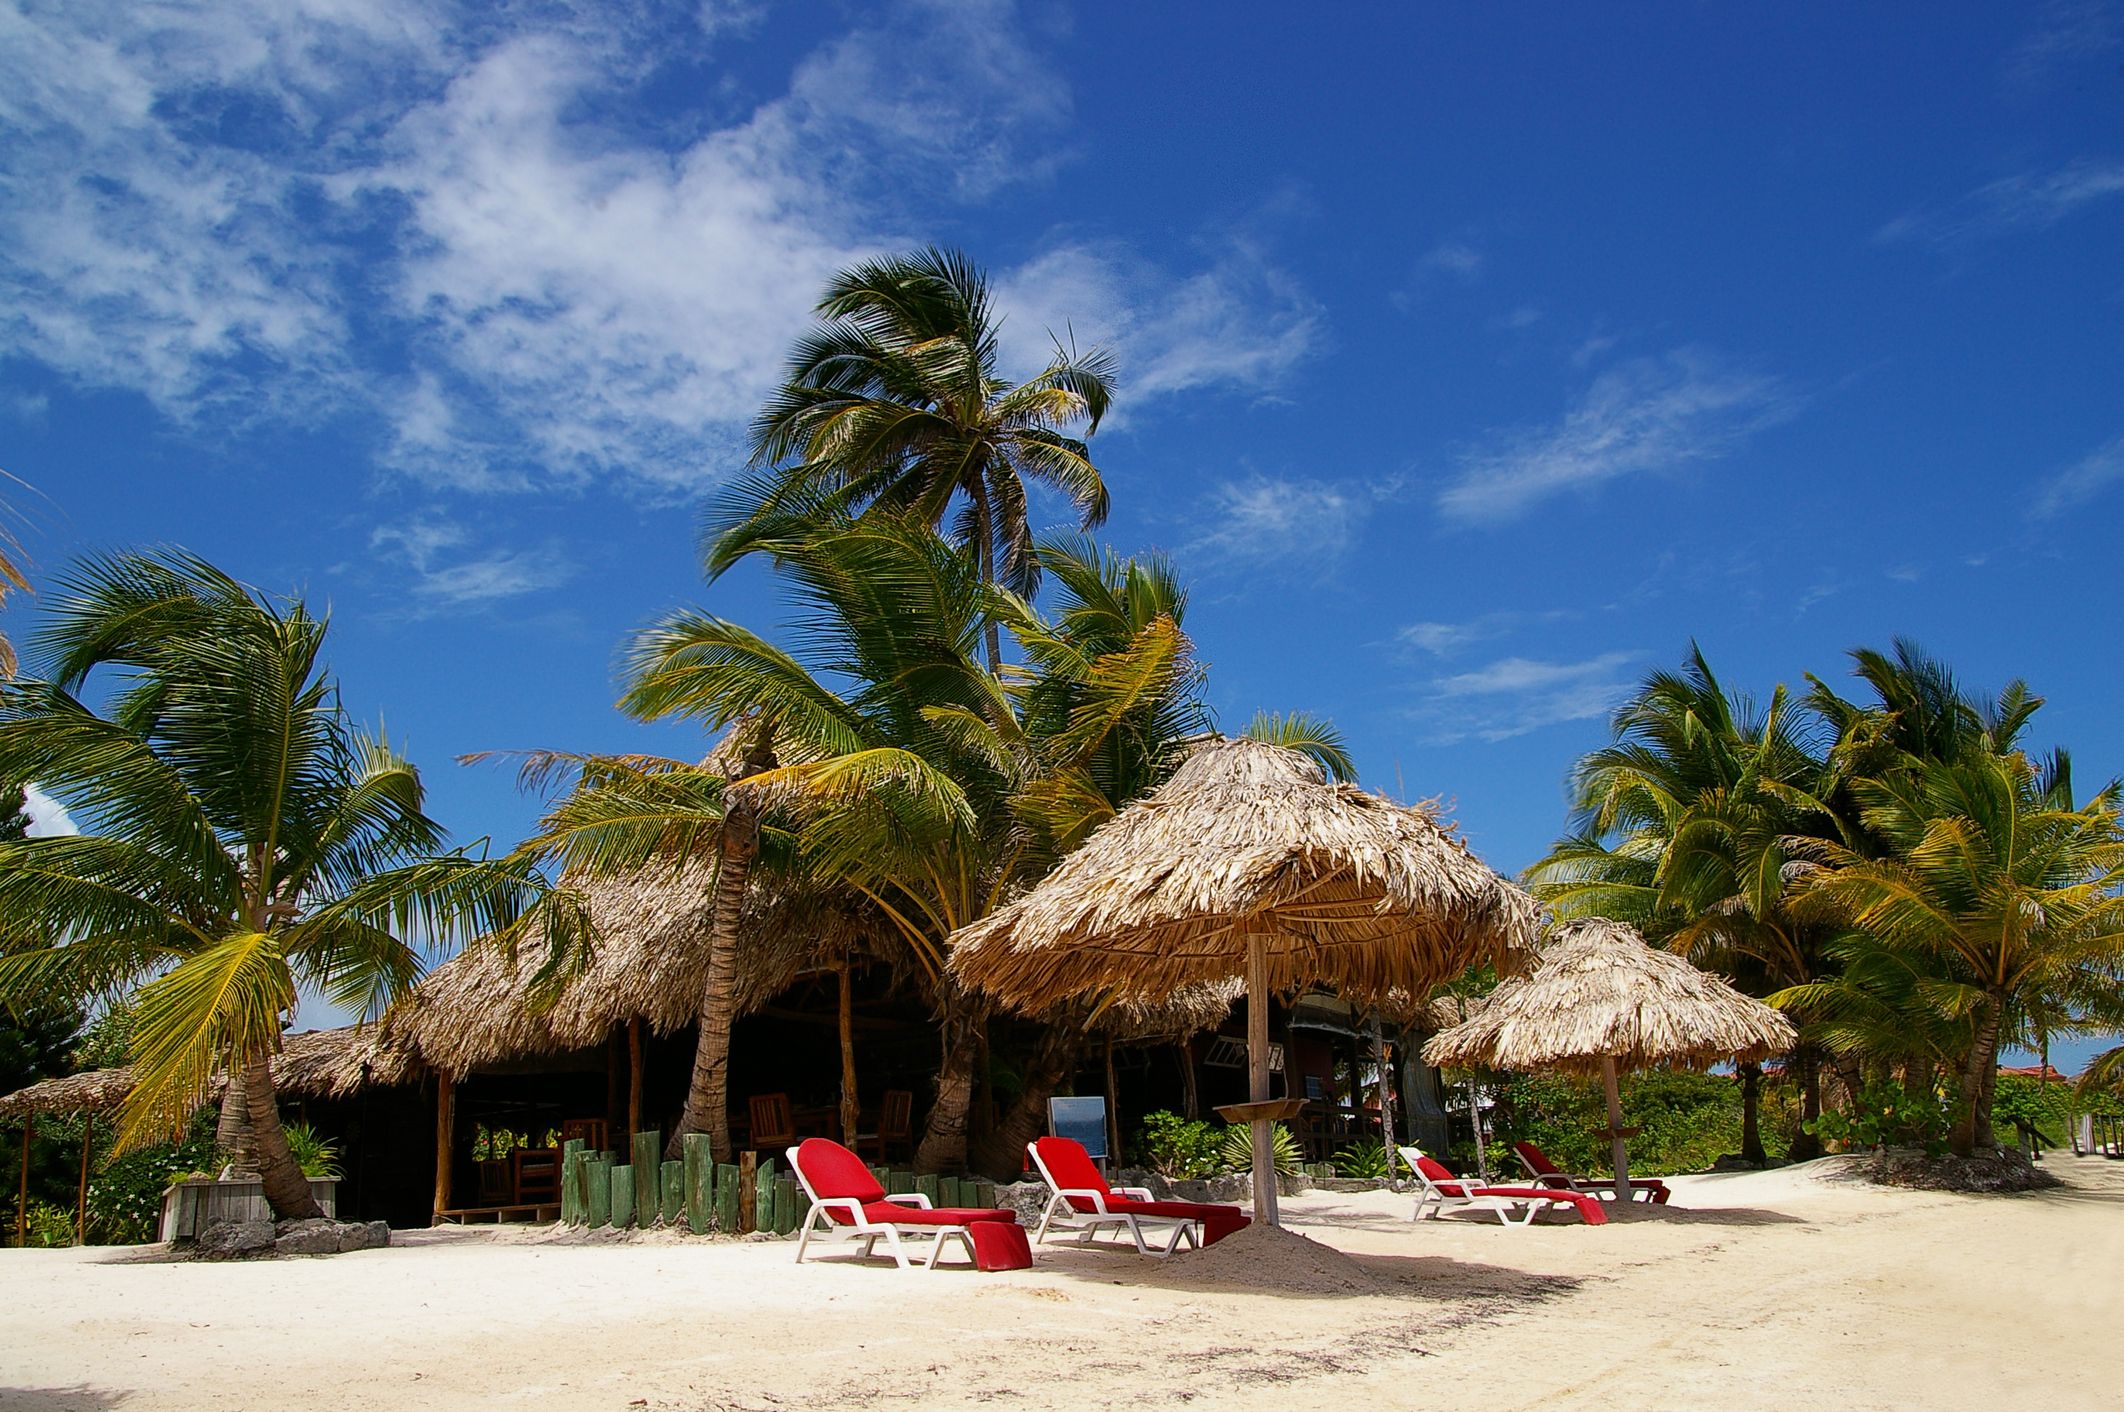 Beach resort in Belize, Central America 